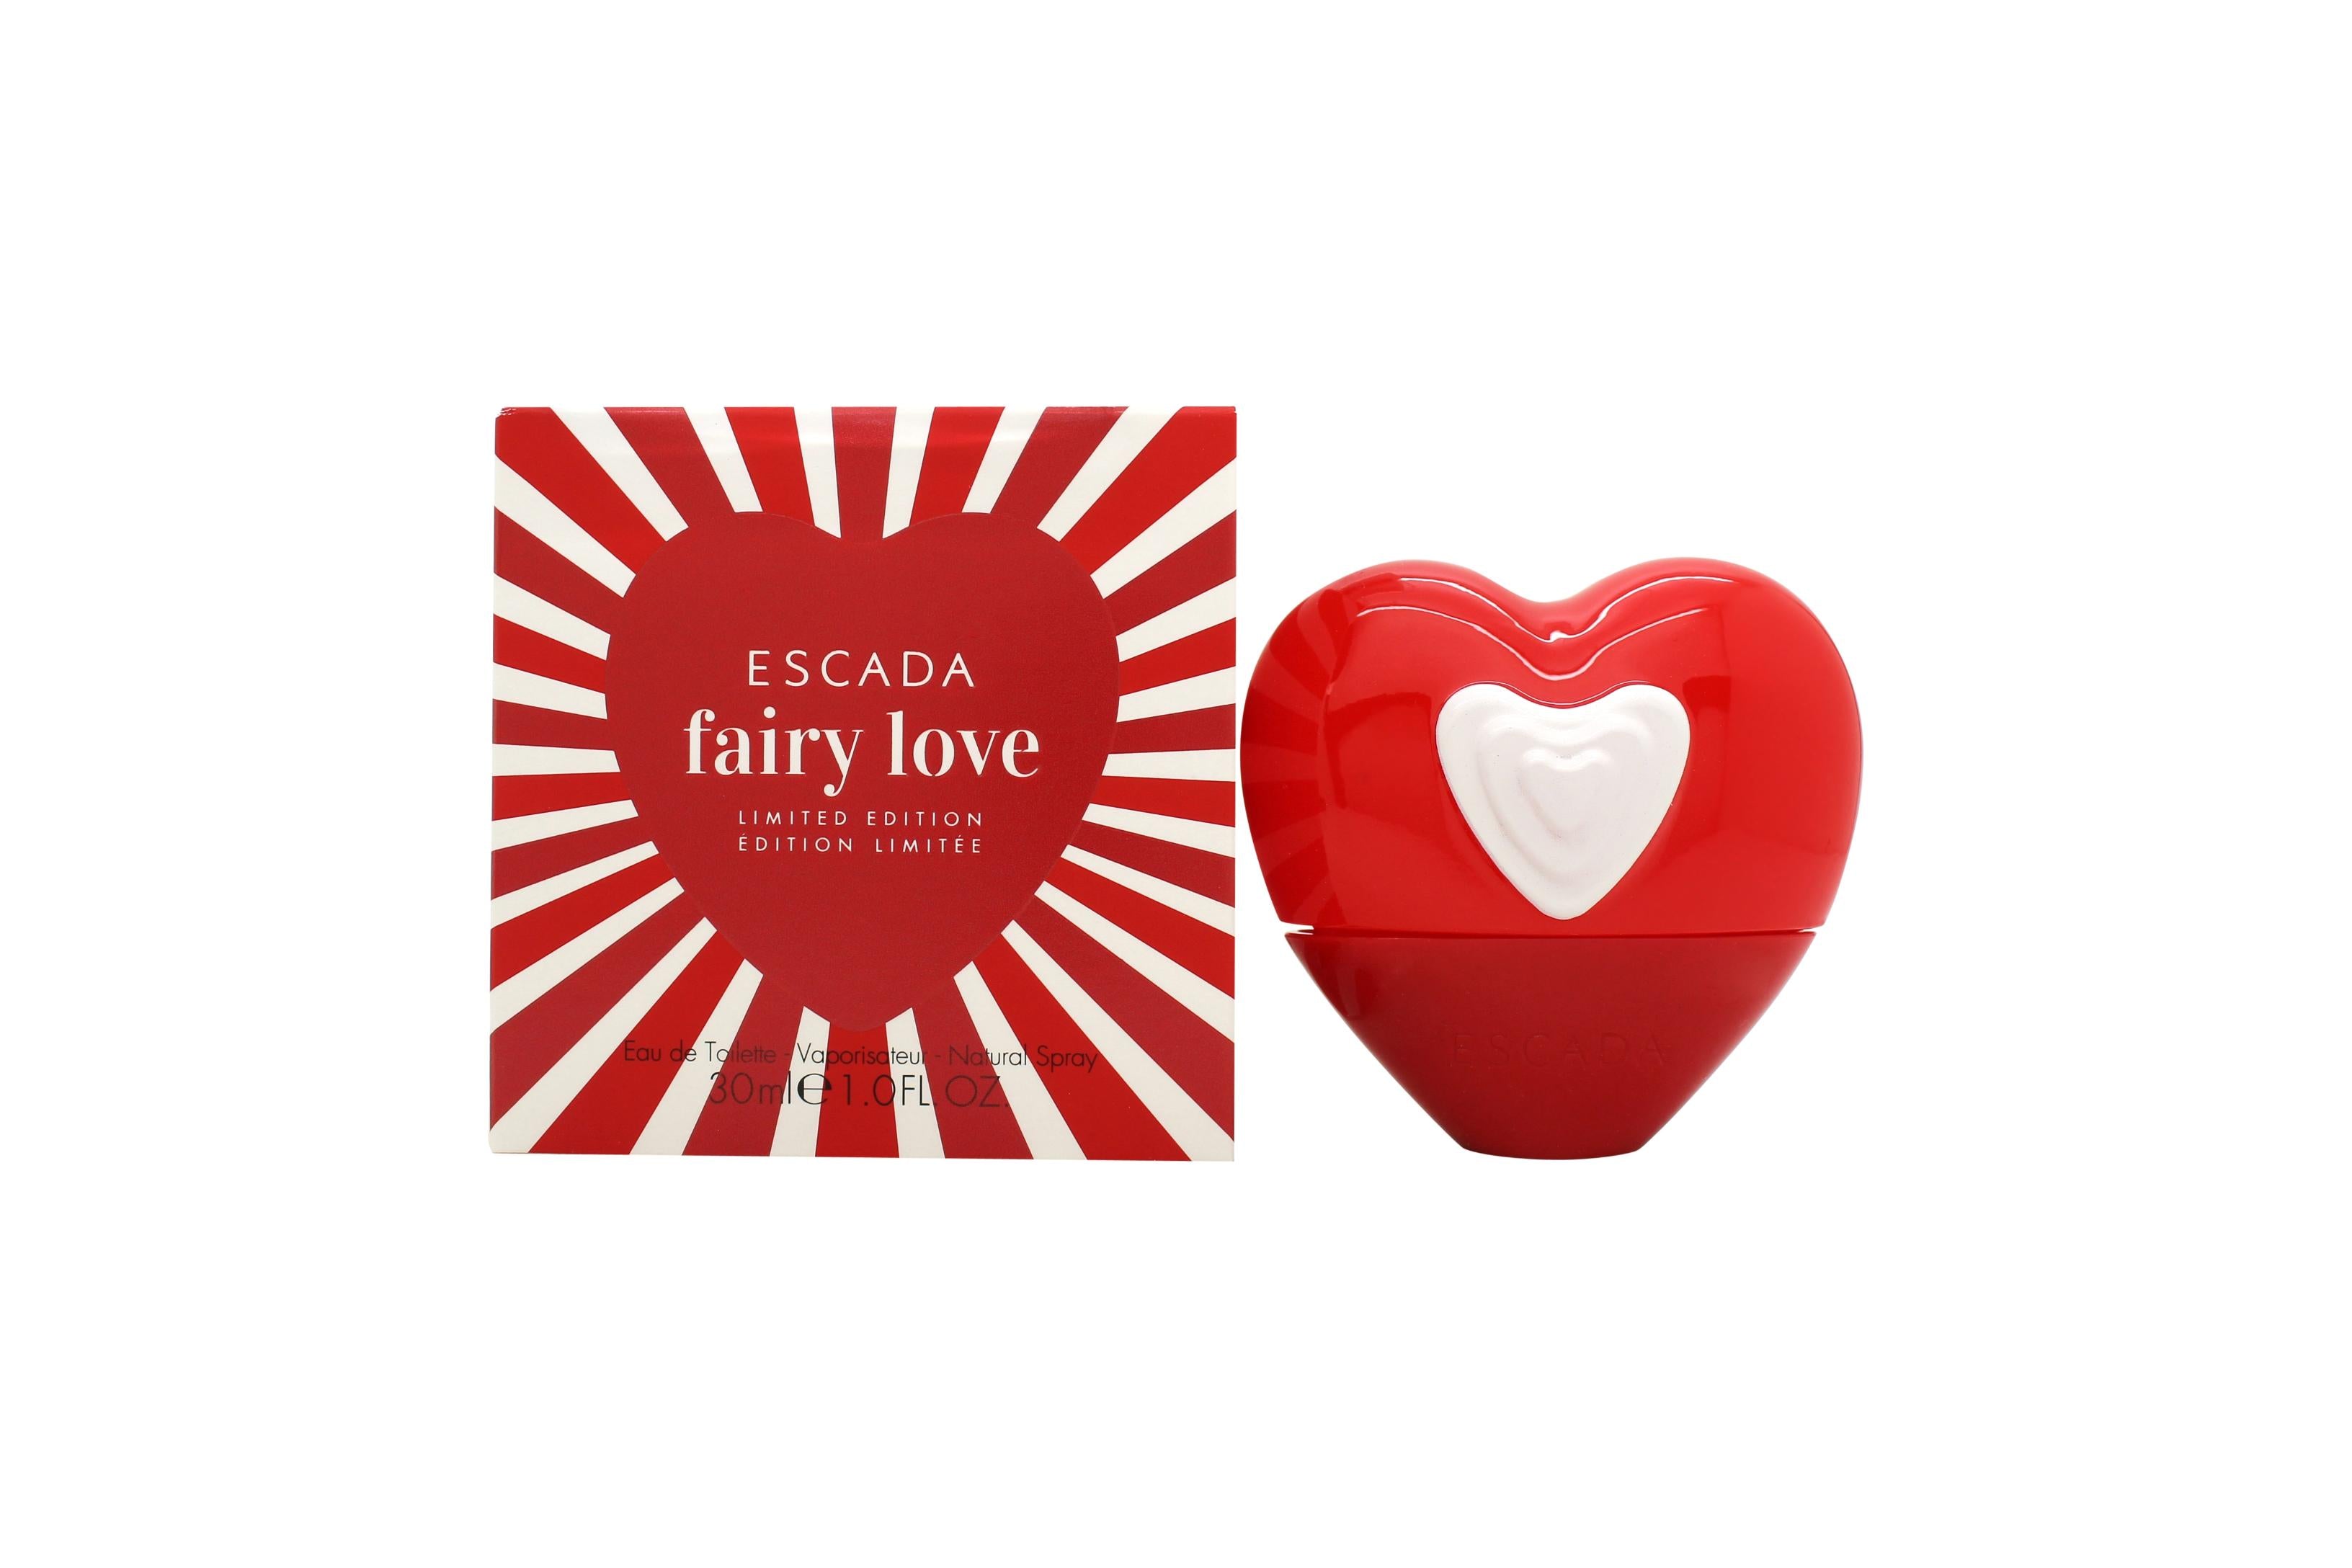 View Escada Fairy Love Eau de Toilette 30ml Spray Limited Edition information